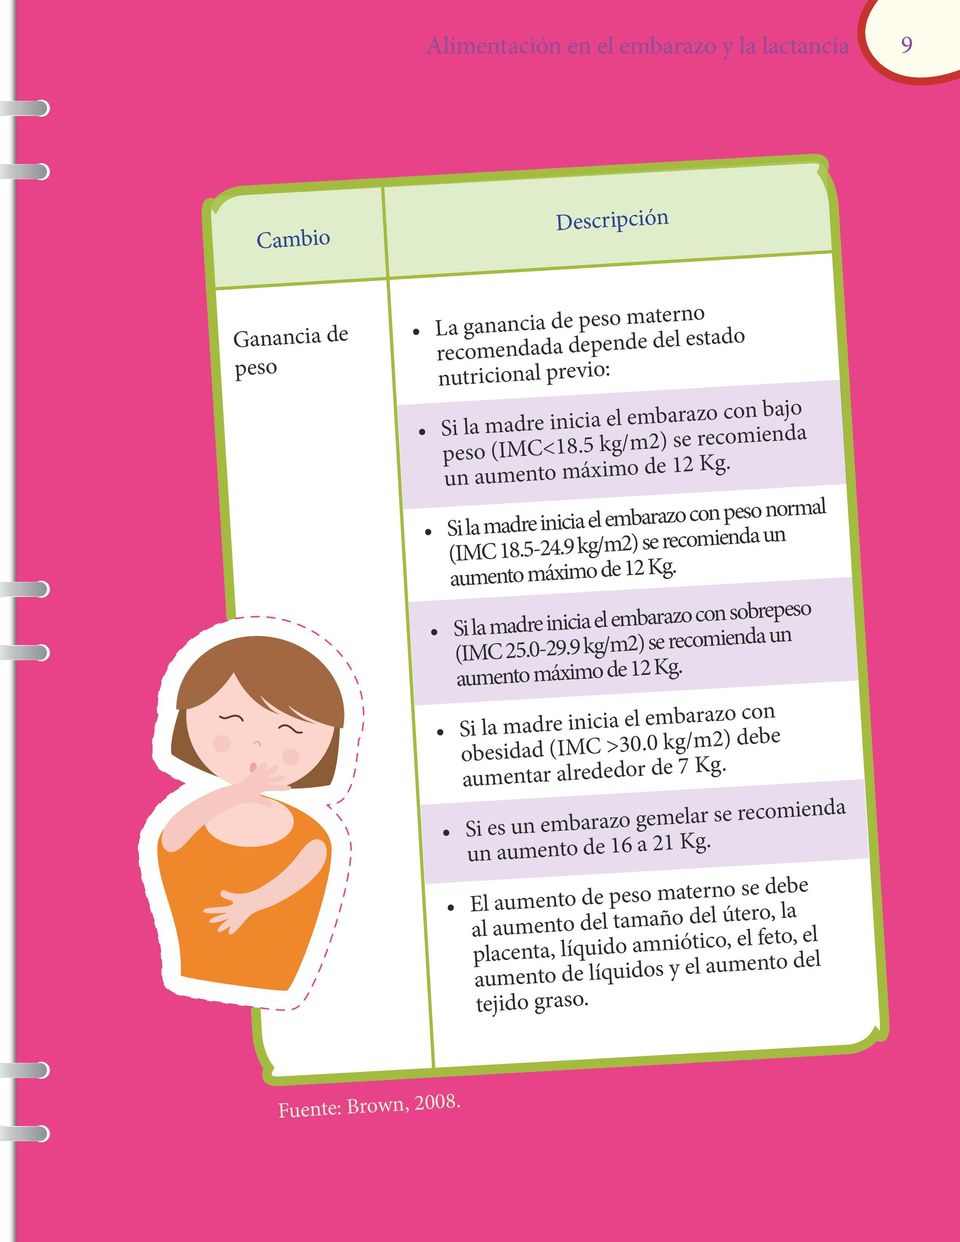 Si la madre inicia el embarazo con sobrepeso (IMC 25.0-29.9 kg/m2) se recomienda un aumento máximo de 12 Kg. Si la madre inicia el embarazo con obesidad (IMC >30.